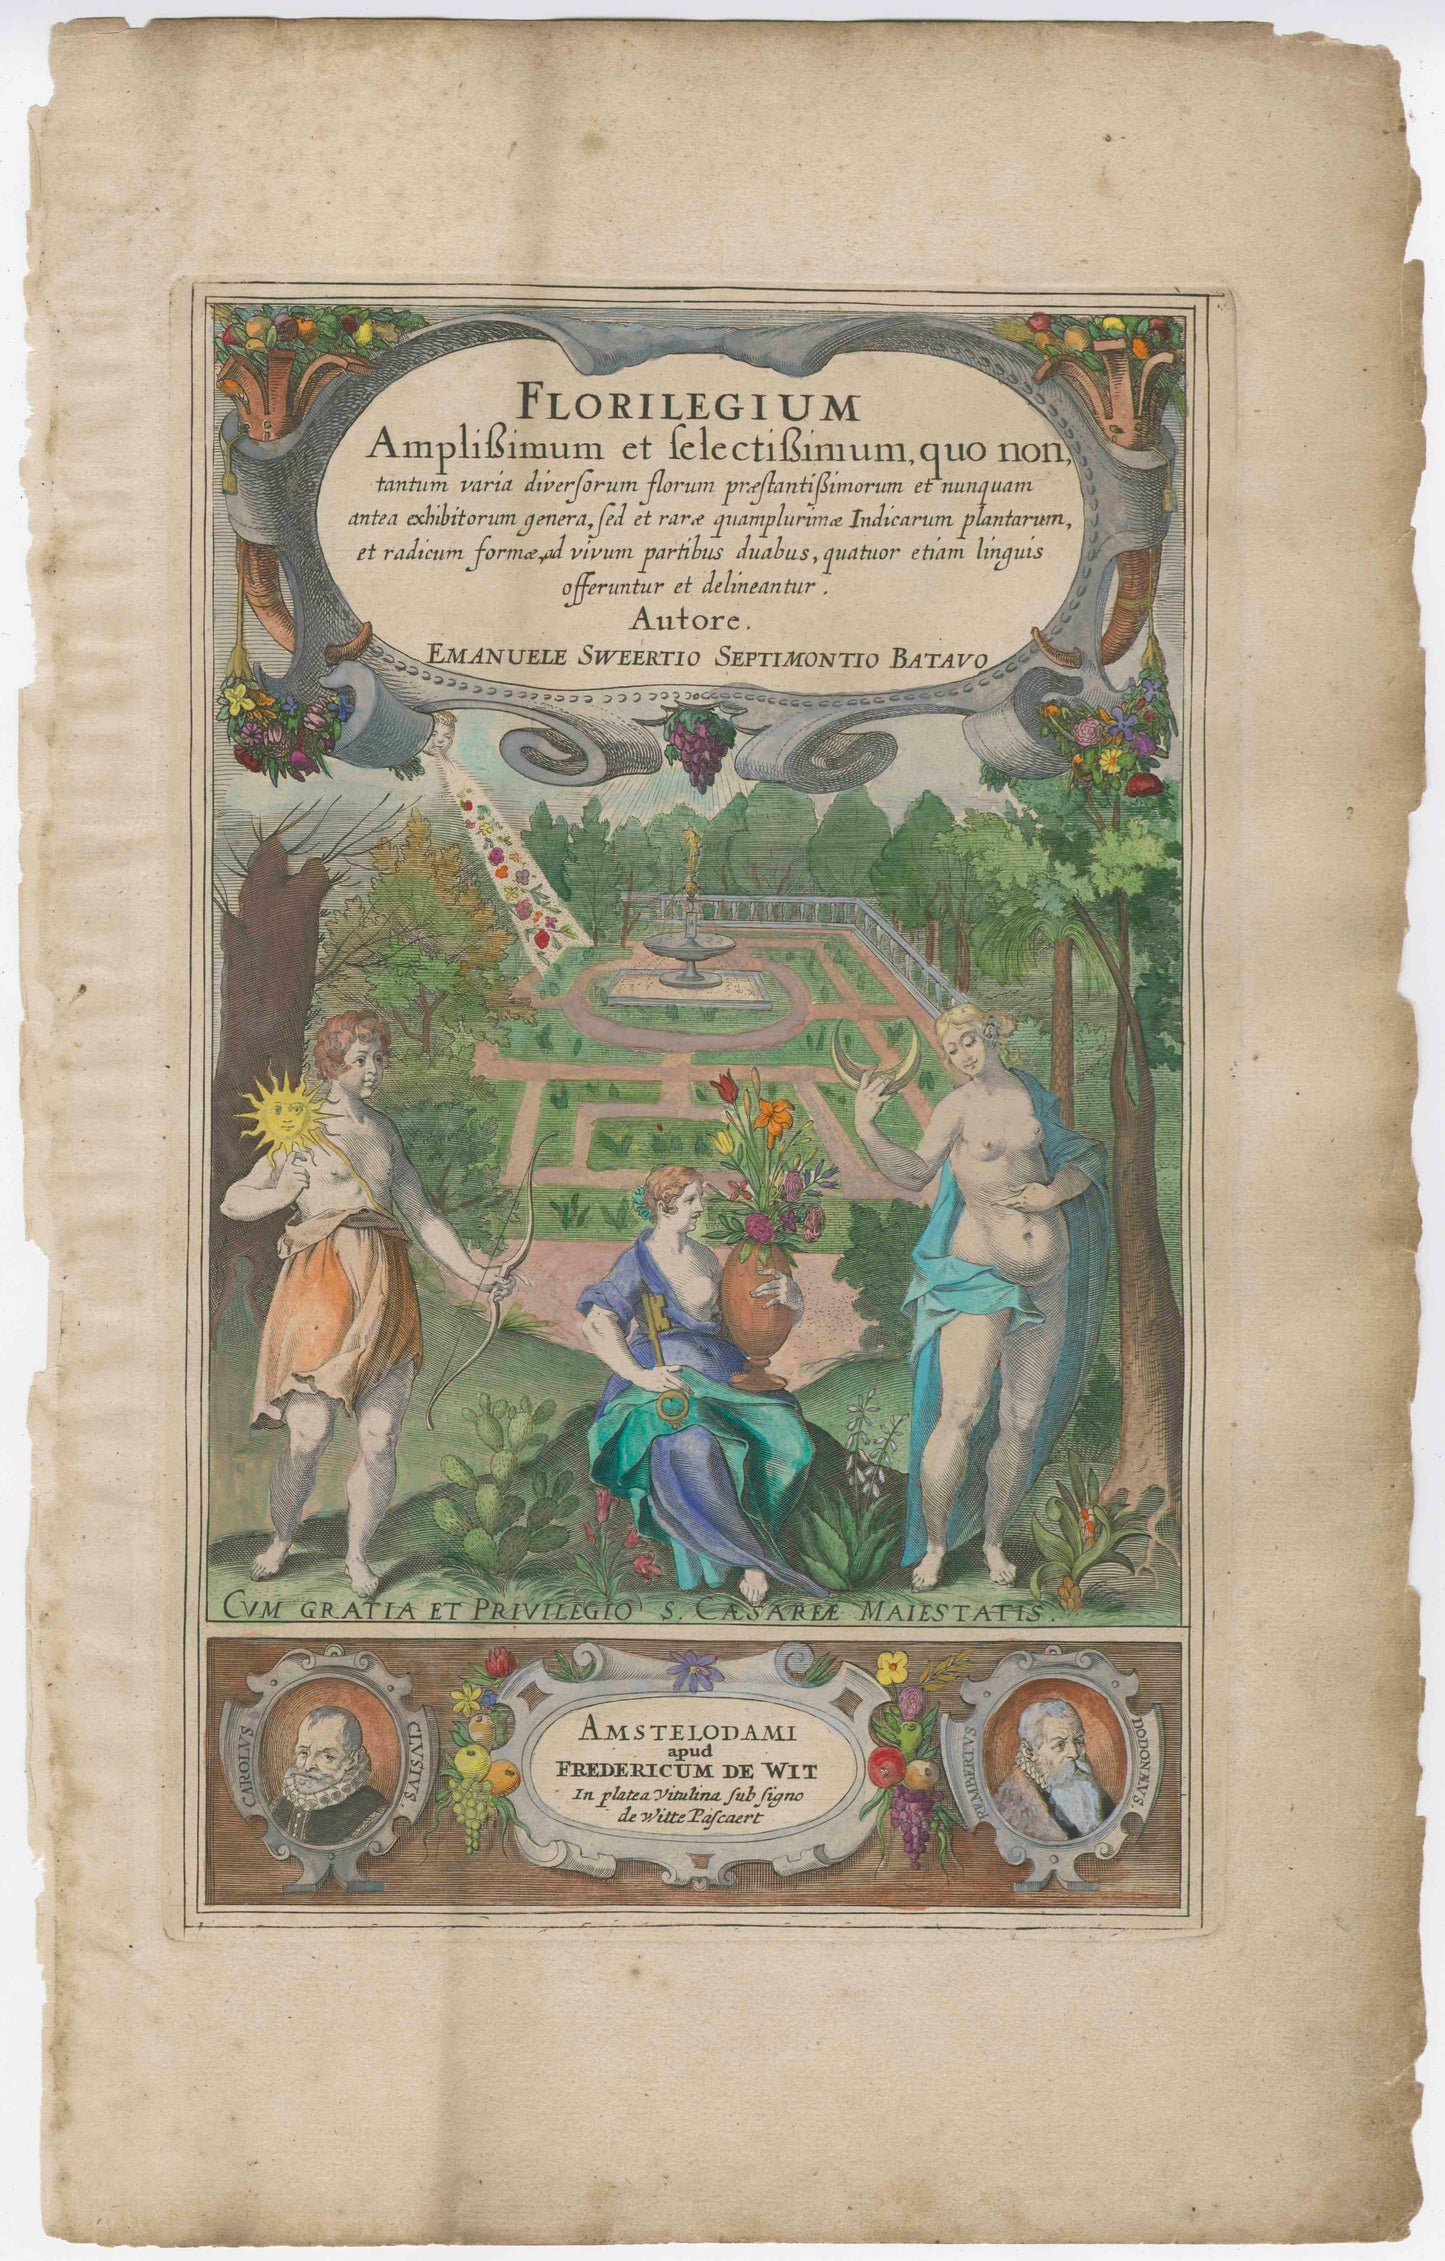 Emanuele Sweerts 17th Century "Florilegium" Print - Plate 63